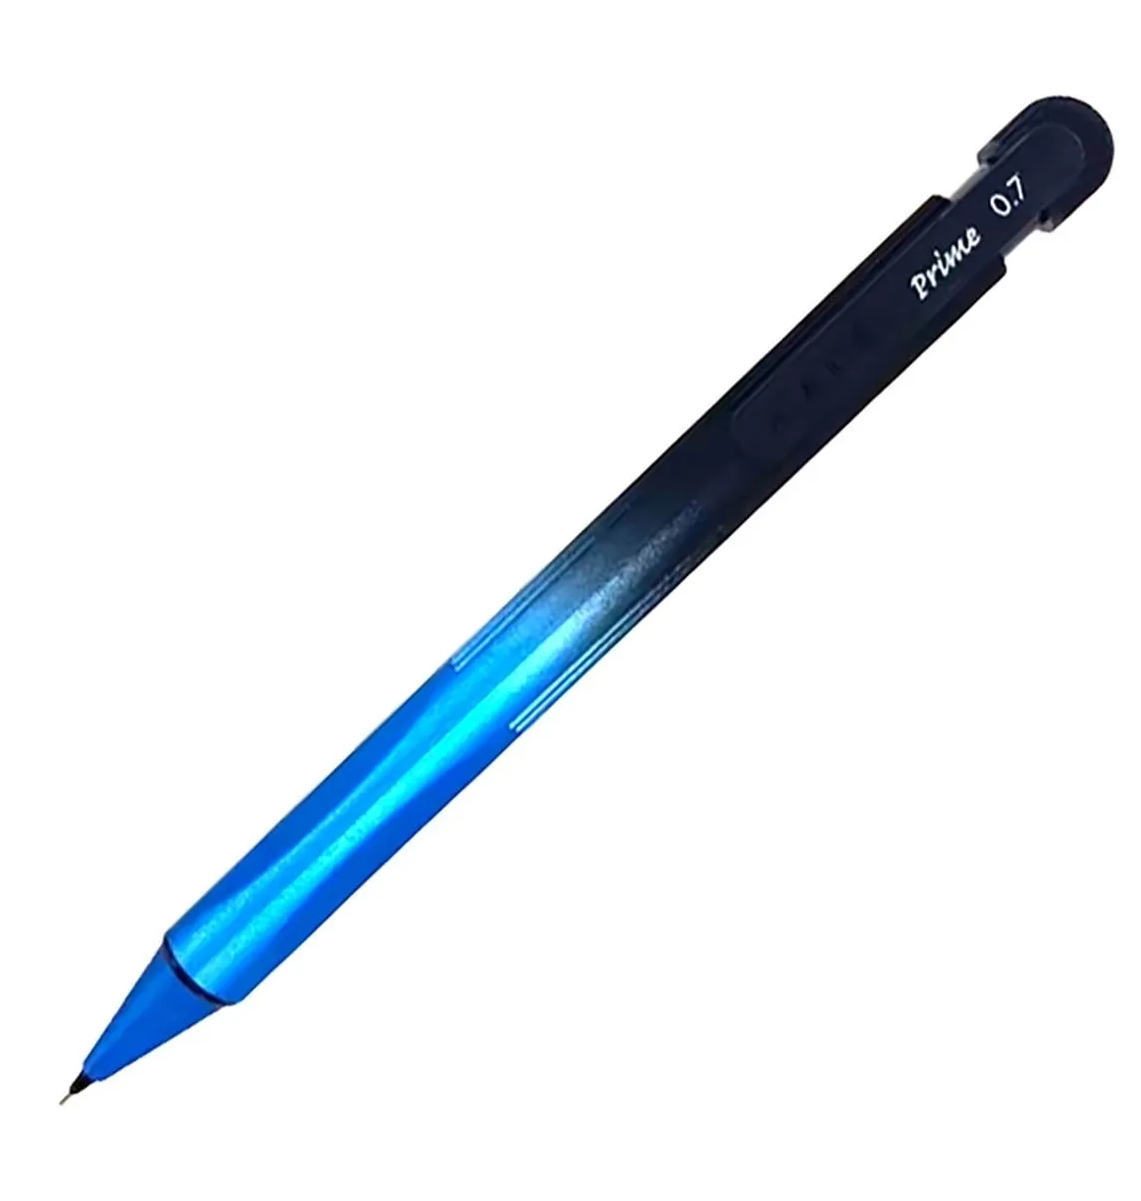 Adel Mash Mekanizmalı Versatil Kalem Metalik Mavi-Siyah 0,7mm